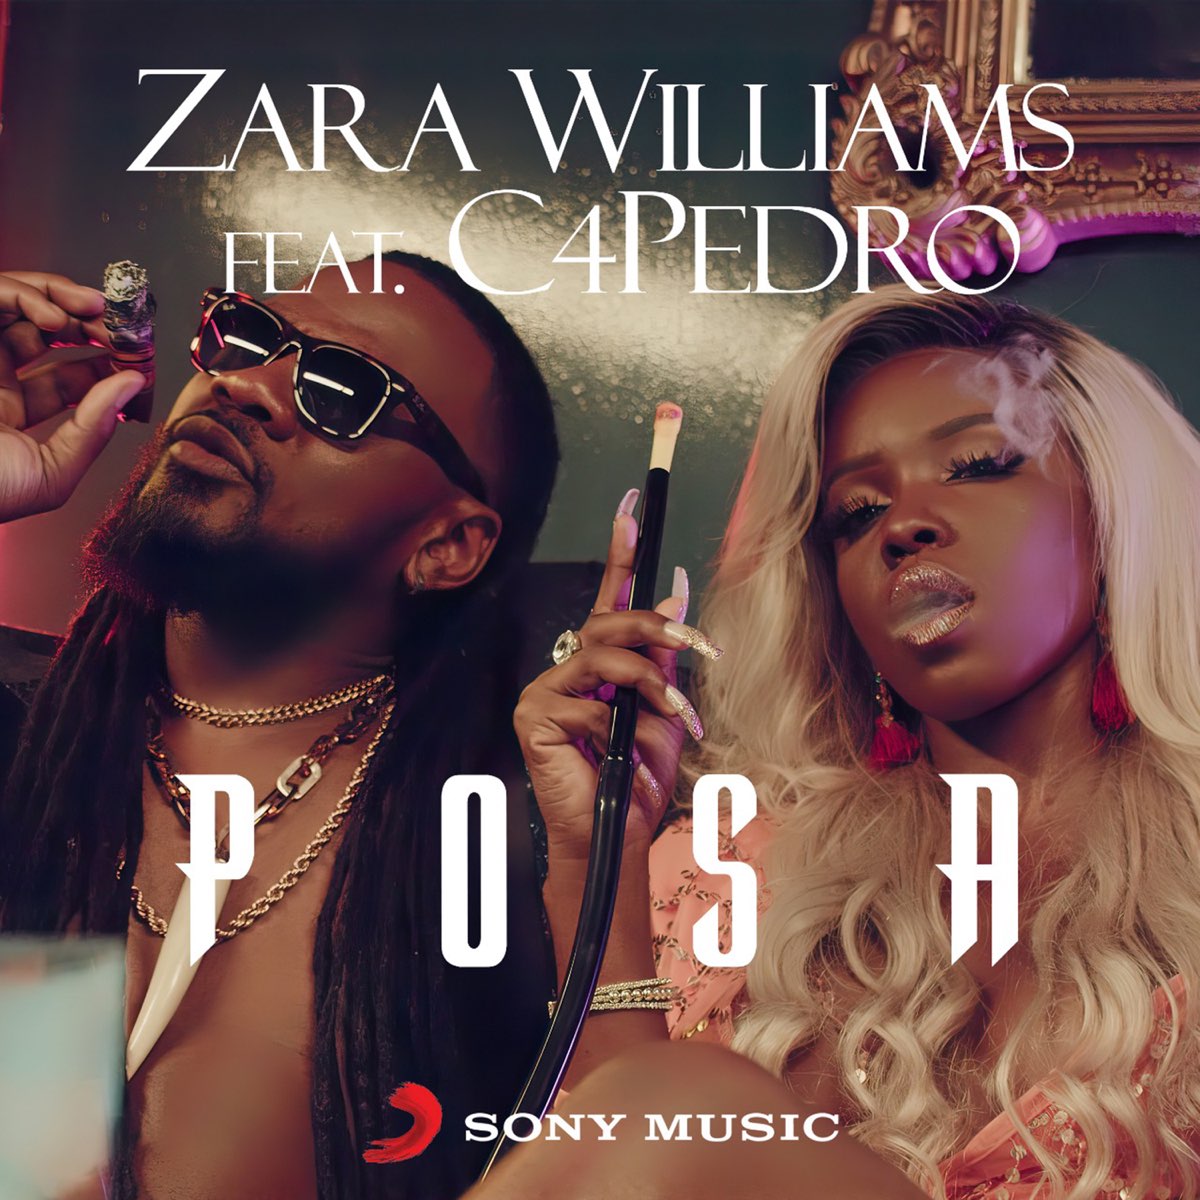 Zara Williams – Posa (feat. C4 Pedro)